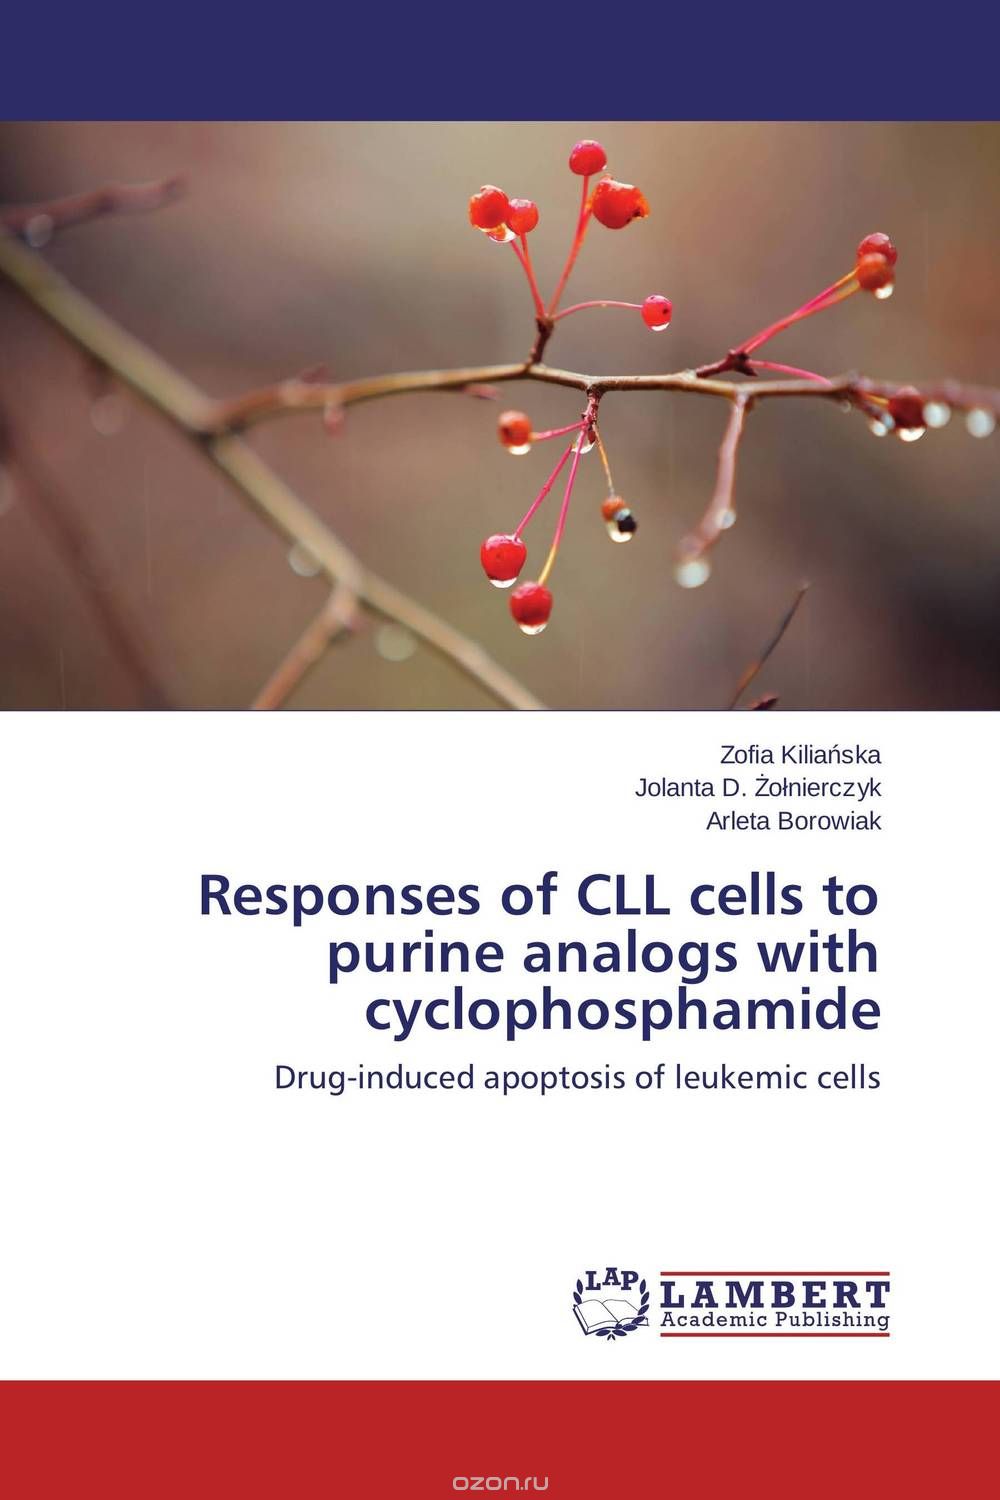 Скачать книгу "Responses of CLL cells to purine analogs with cyclophosphamide"